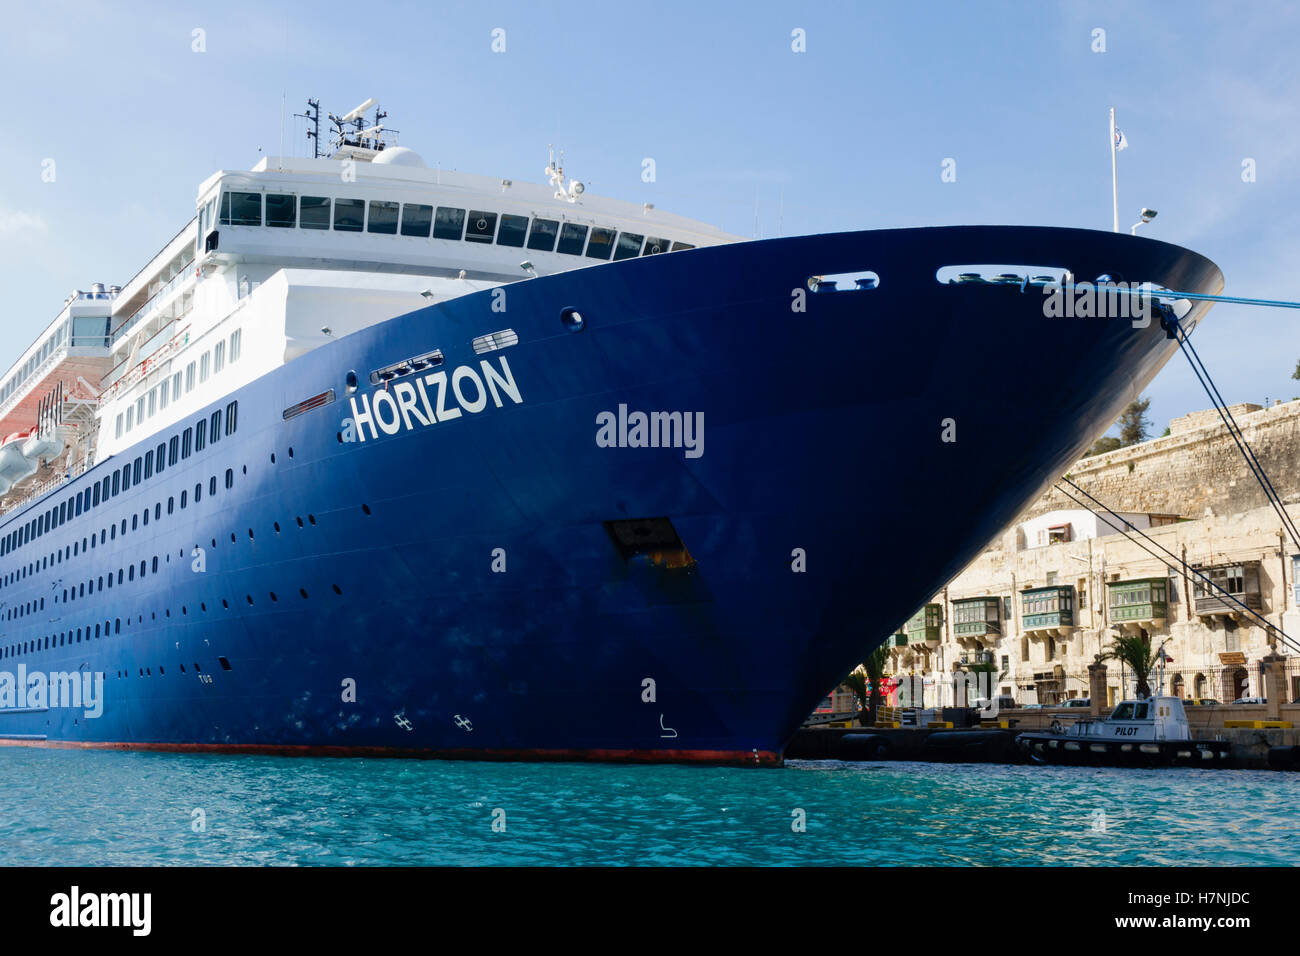 Malta- the Grand Harbour, Valletta. Cruise ship destination, boarding port and stop. Croisieres de France. Stock Photo